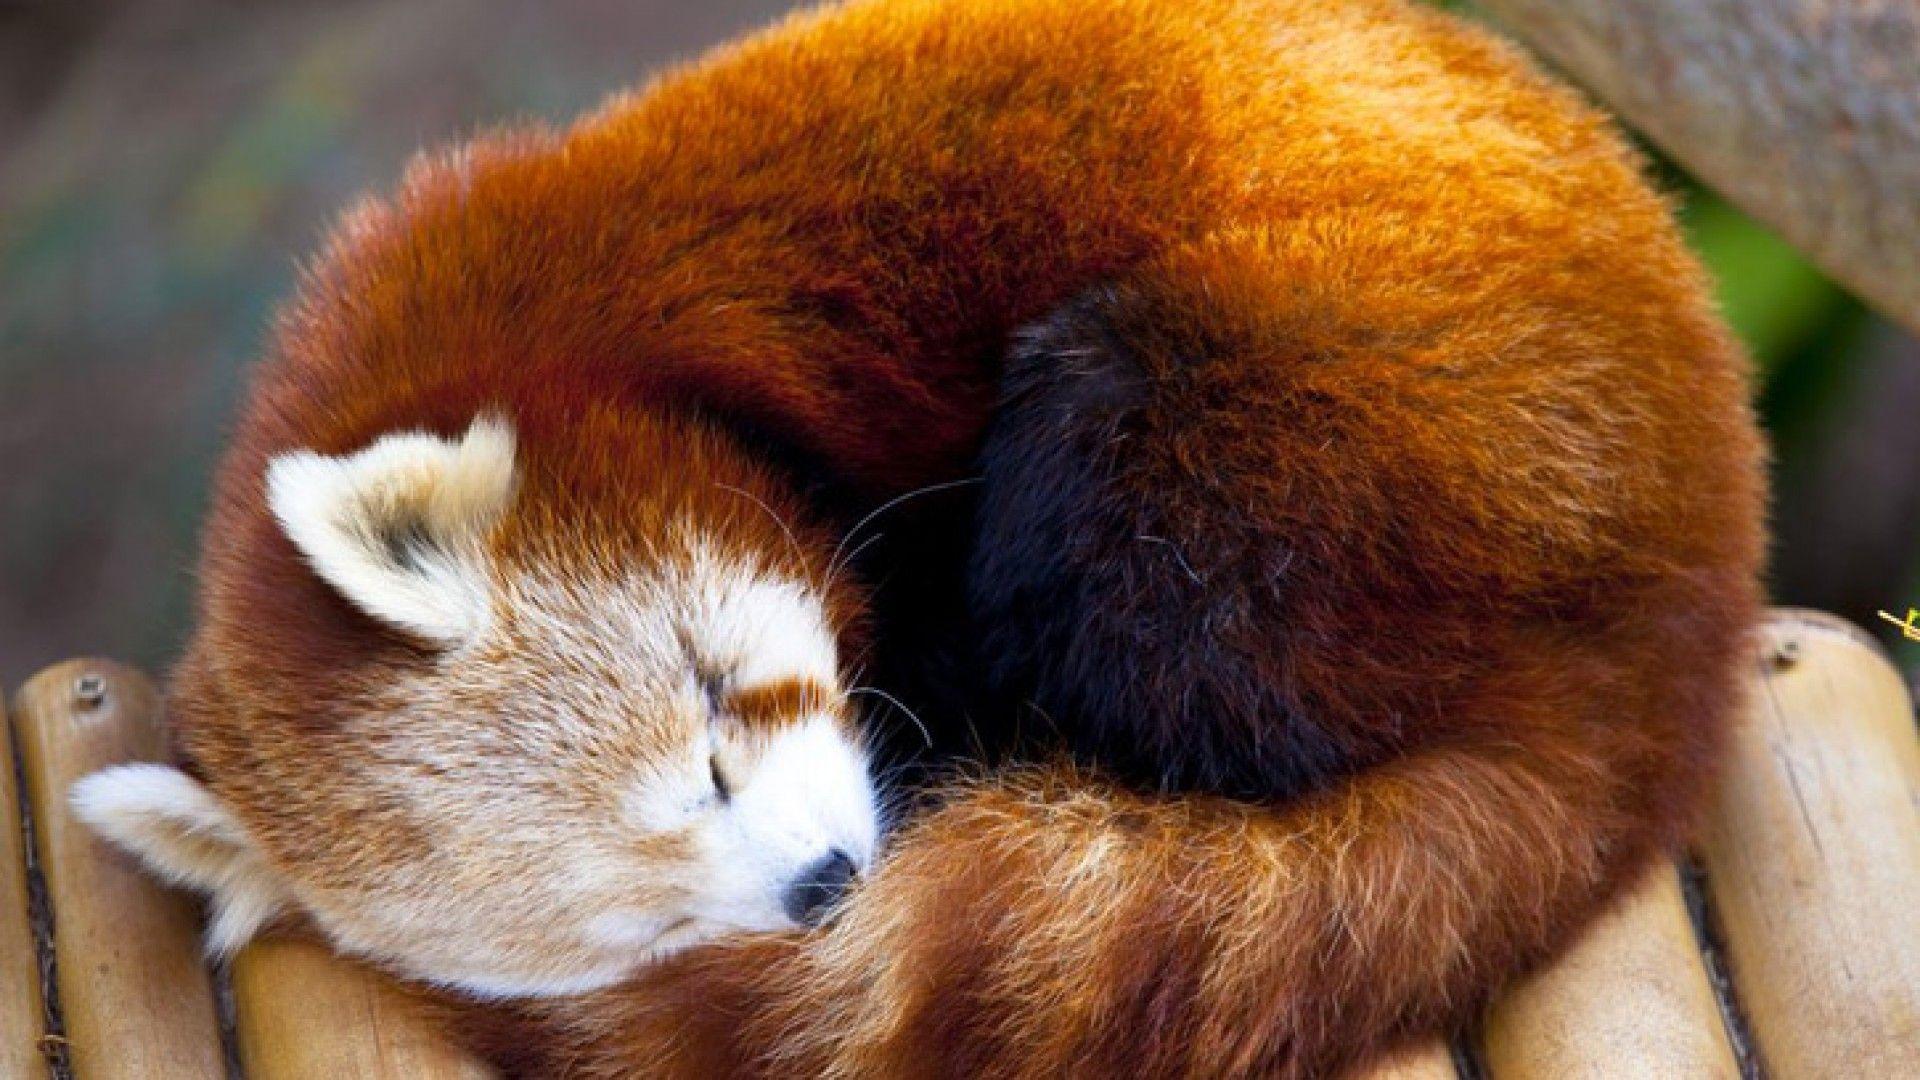 Cute Baby Red Pandas Wallpapers - Top Free Cute Baby Red Pandas